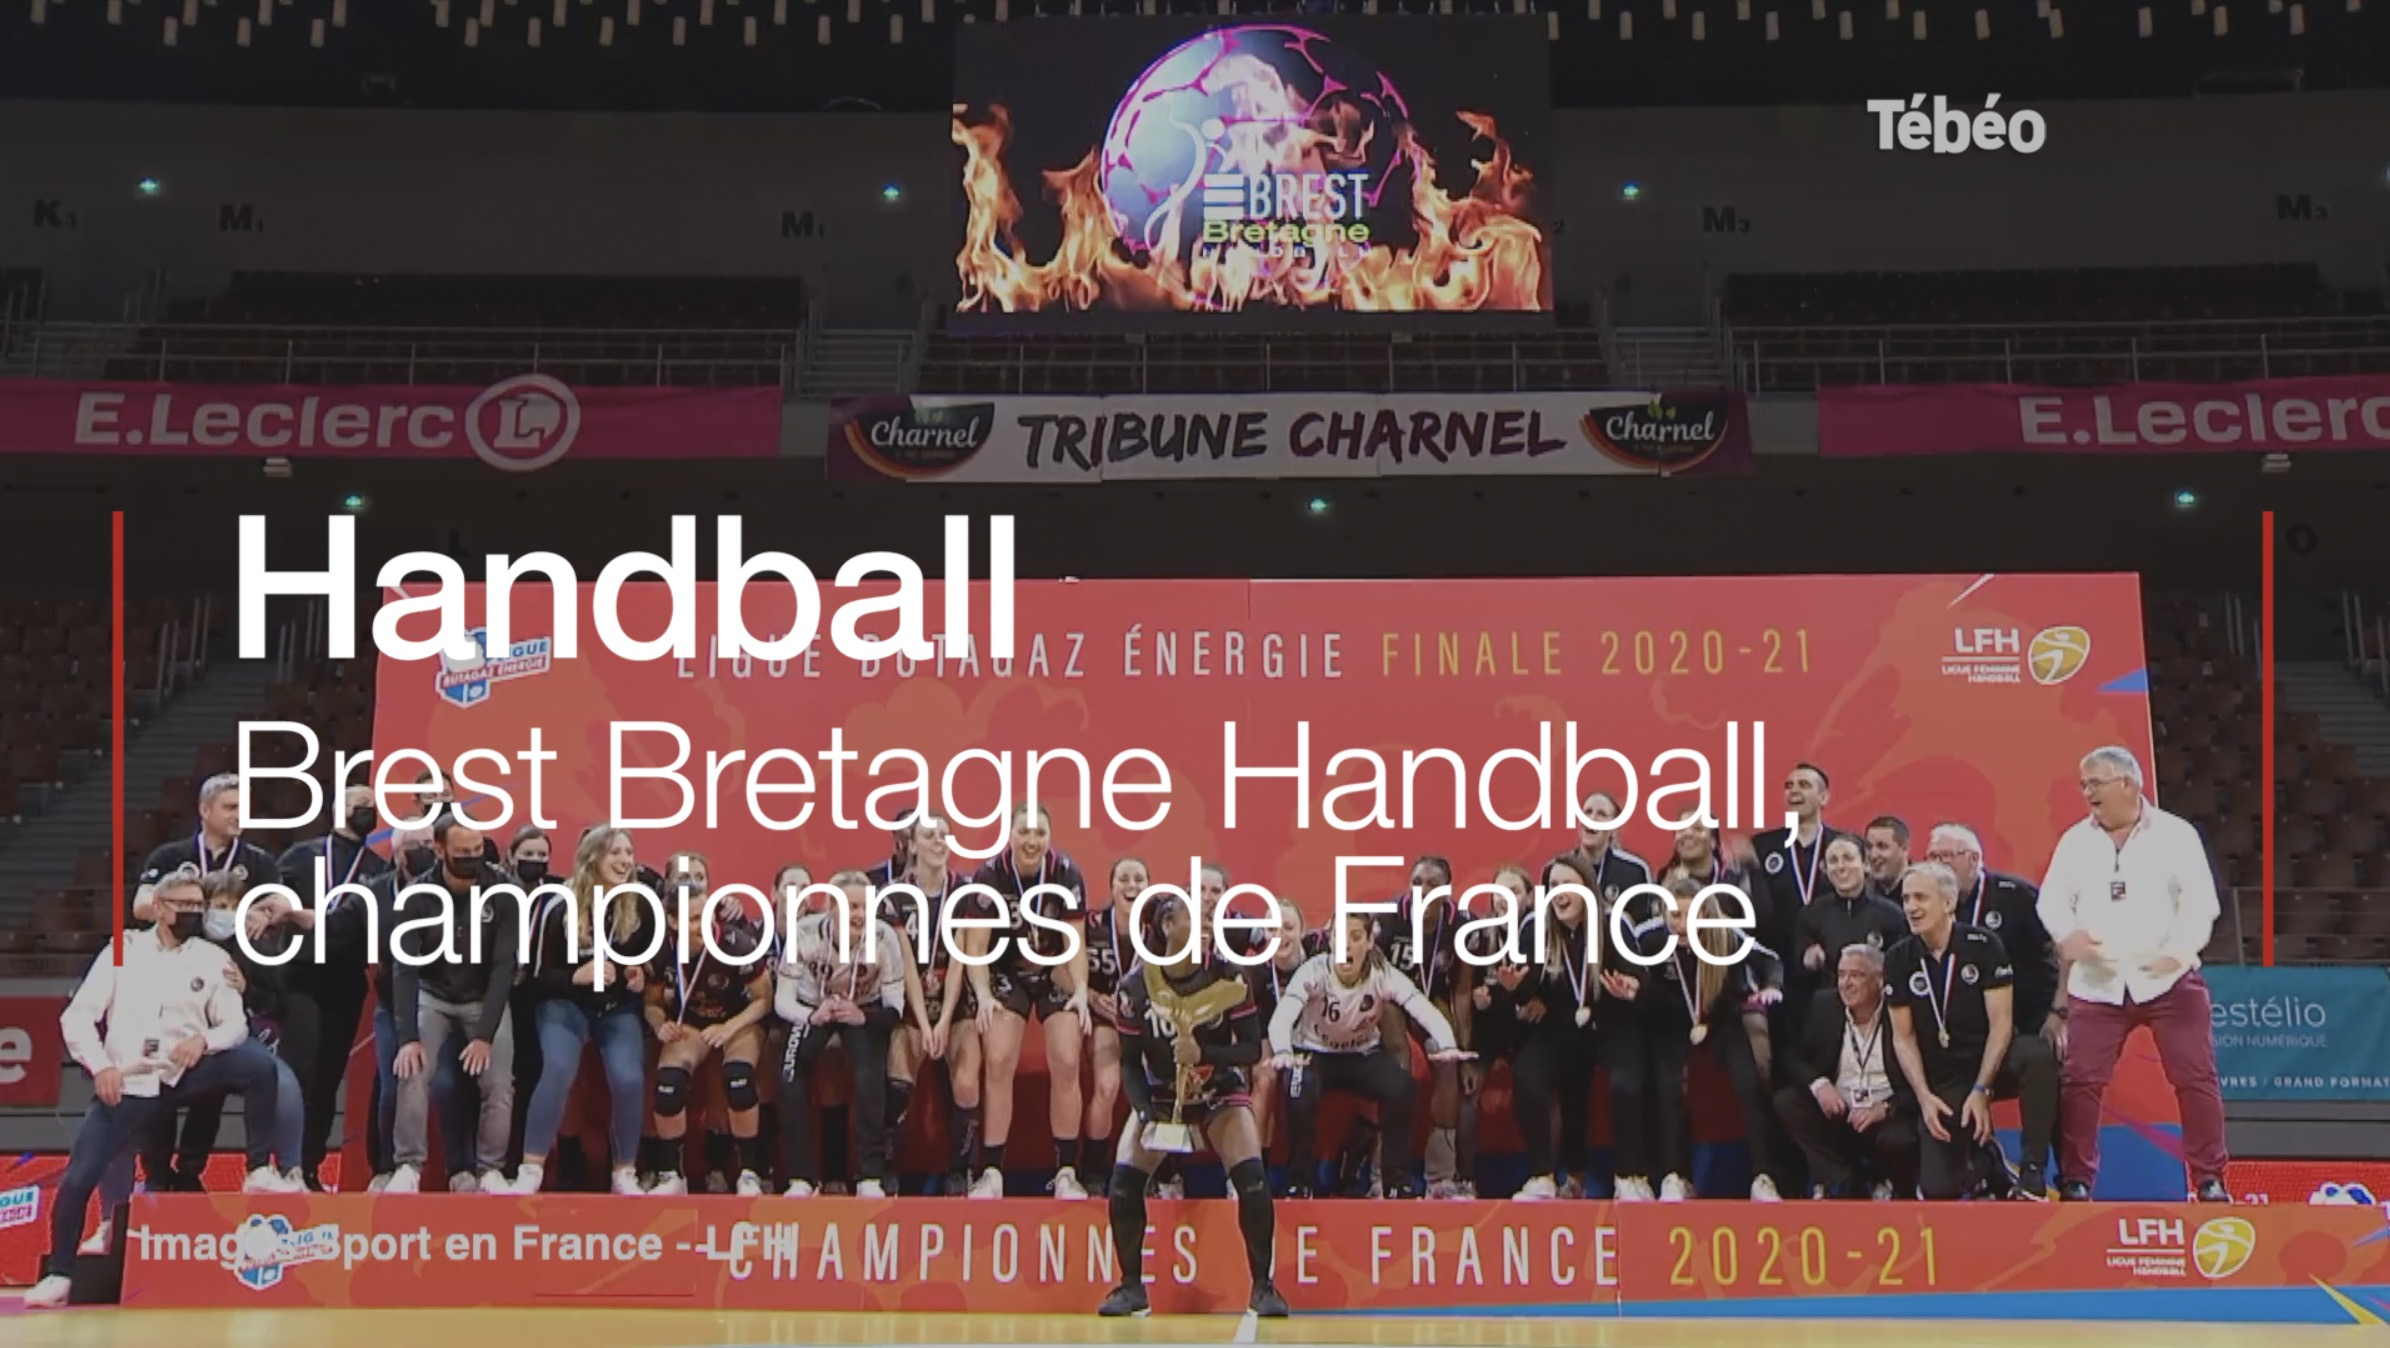 Handball. Brest Bretagne Handball, championnes de France (Le Télégramme)